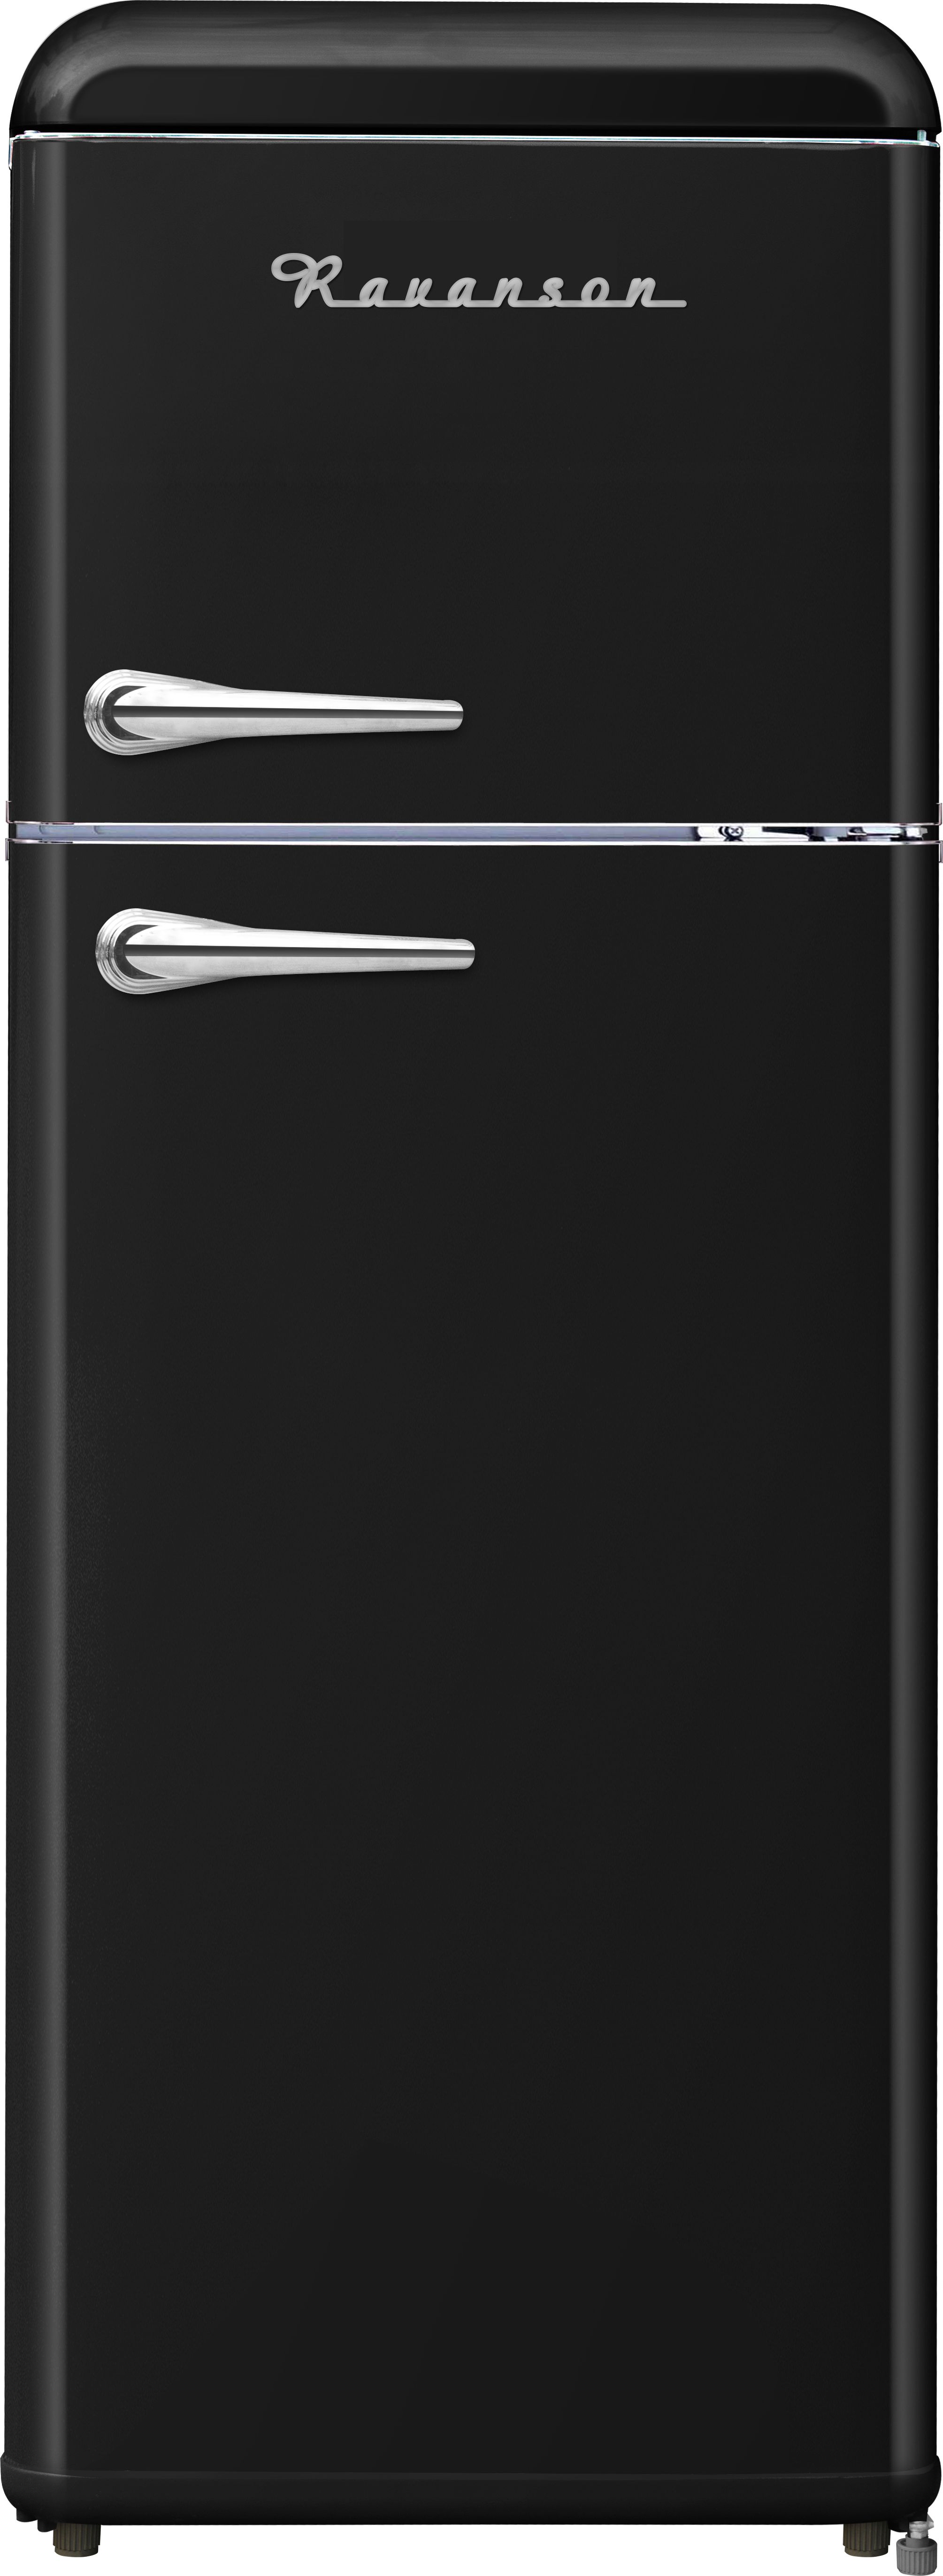 Combine frigorifice - Combina frigorifica  Ravanson LKK-210RB,Negru,3 rafturi,
39 dB,Înălţime
147 cm